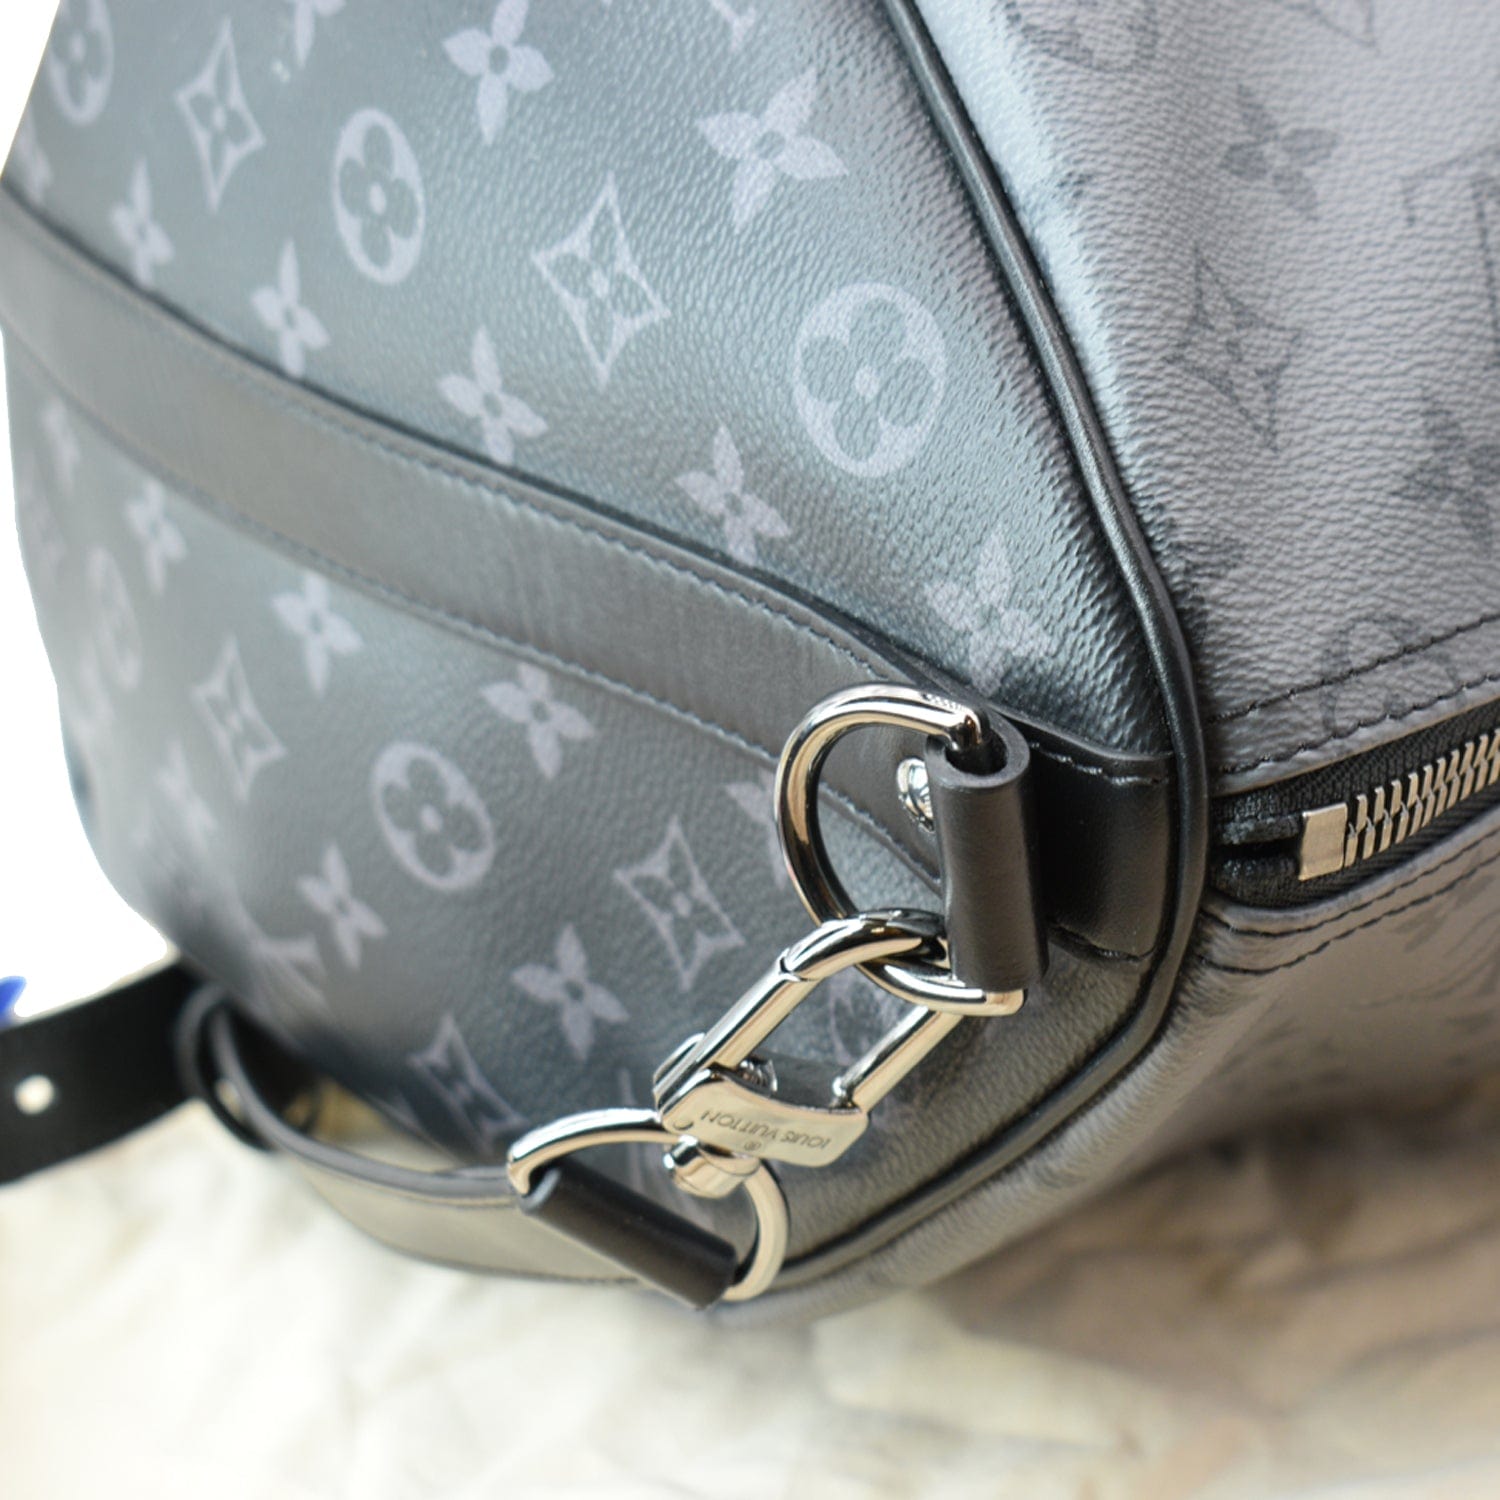 LOUIS VUITTON KEEPALL BAG REVIEW 2021 - Louis Vuitton Travel Bag